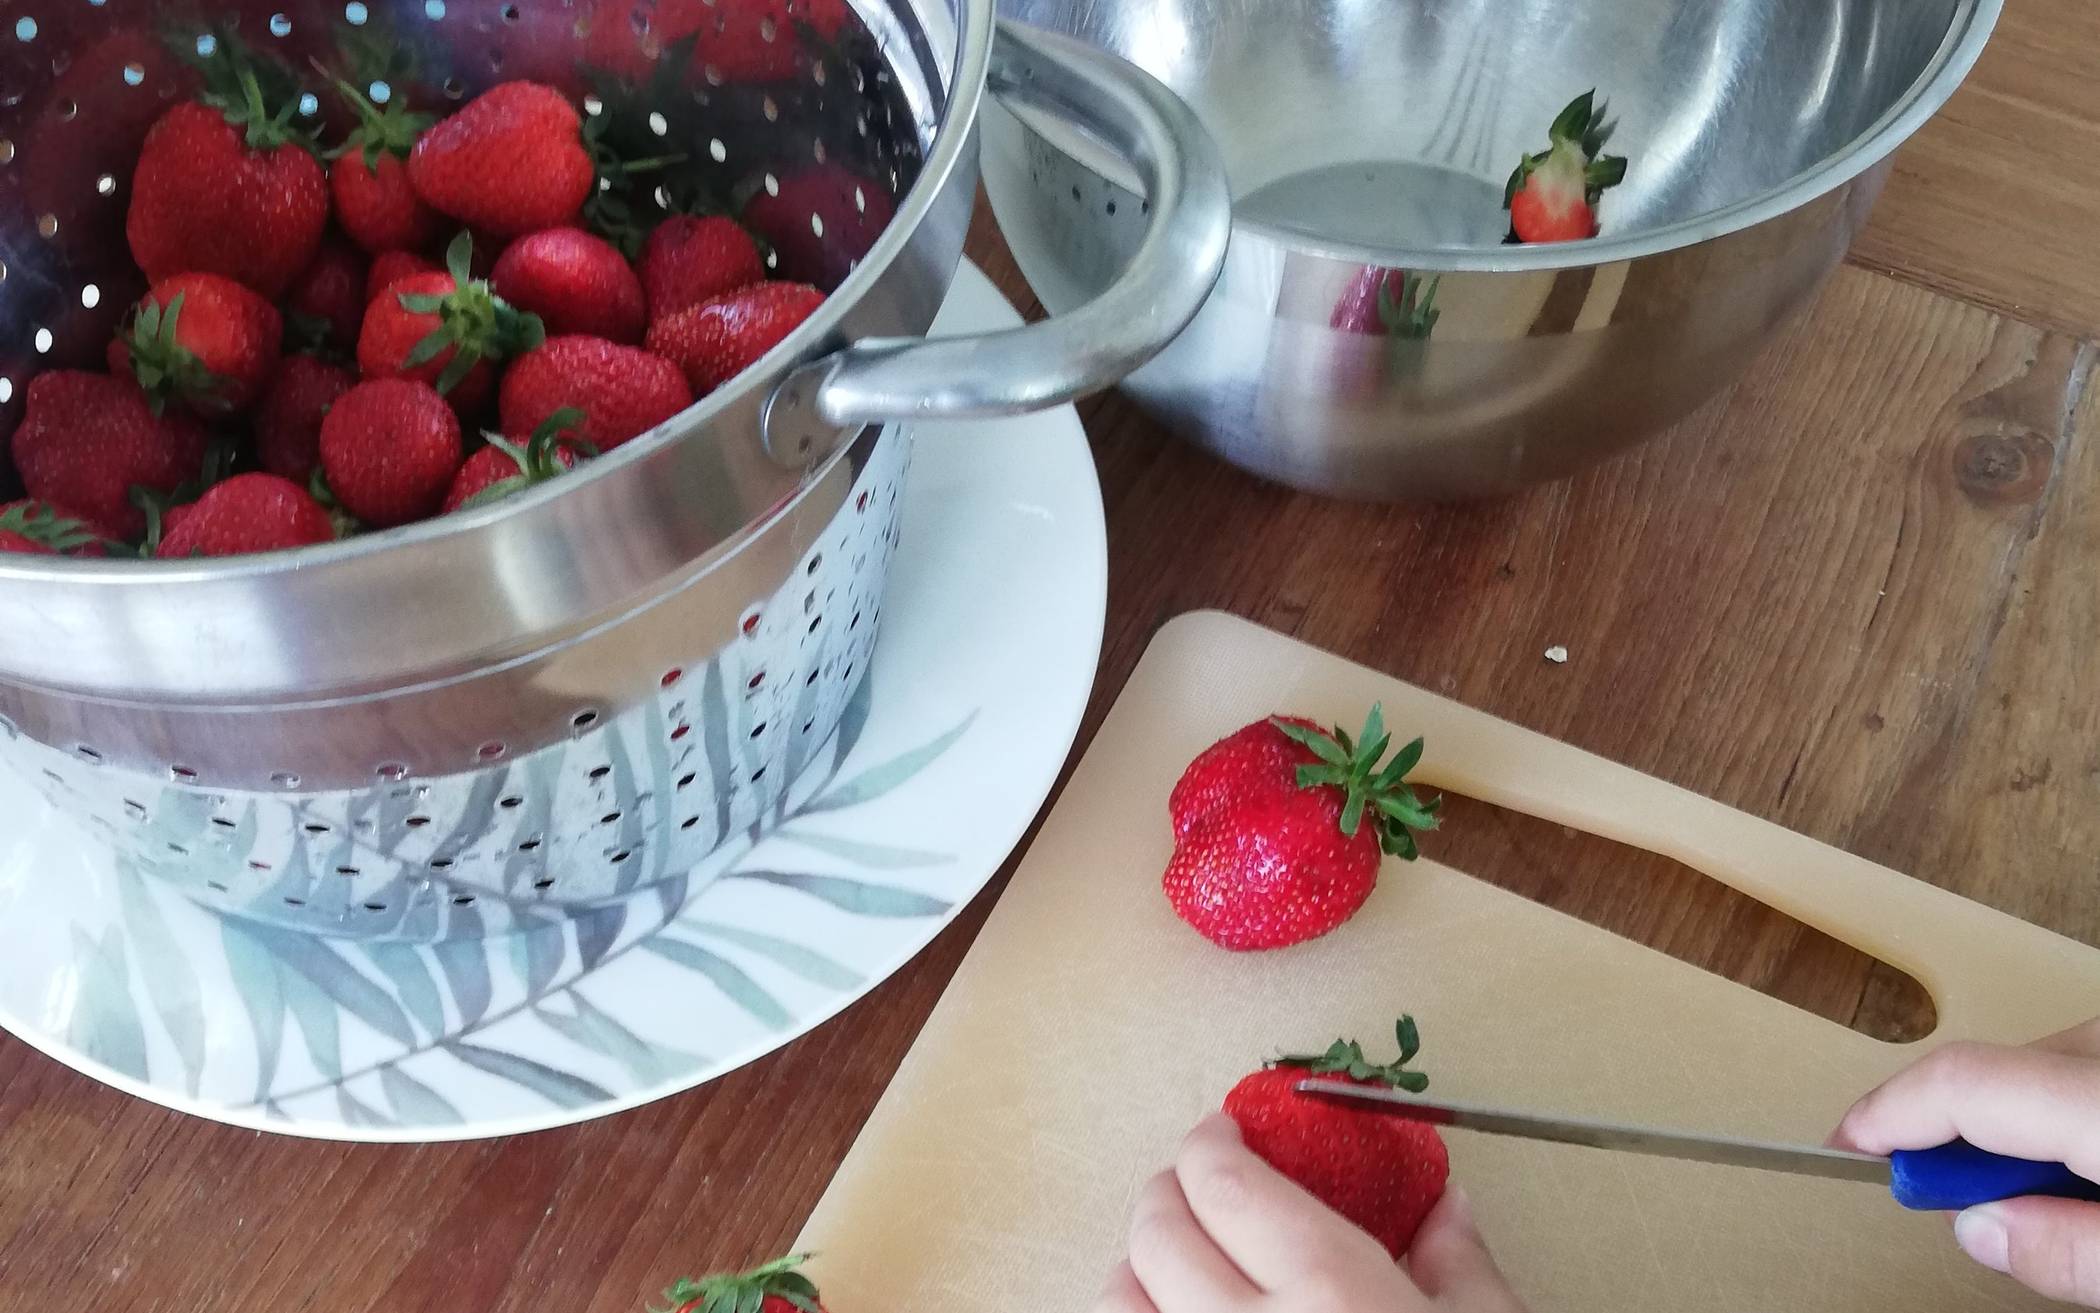 Erdbeeren sind derzeit besonders lecker.